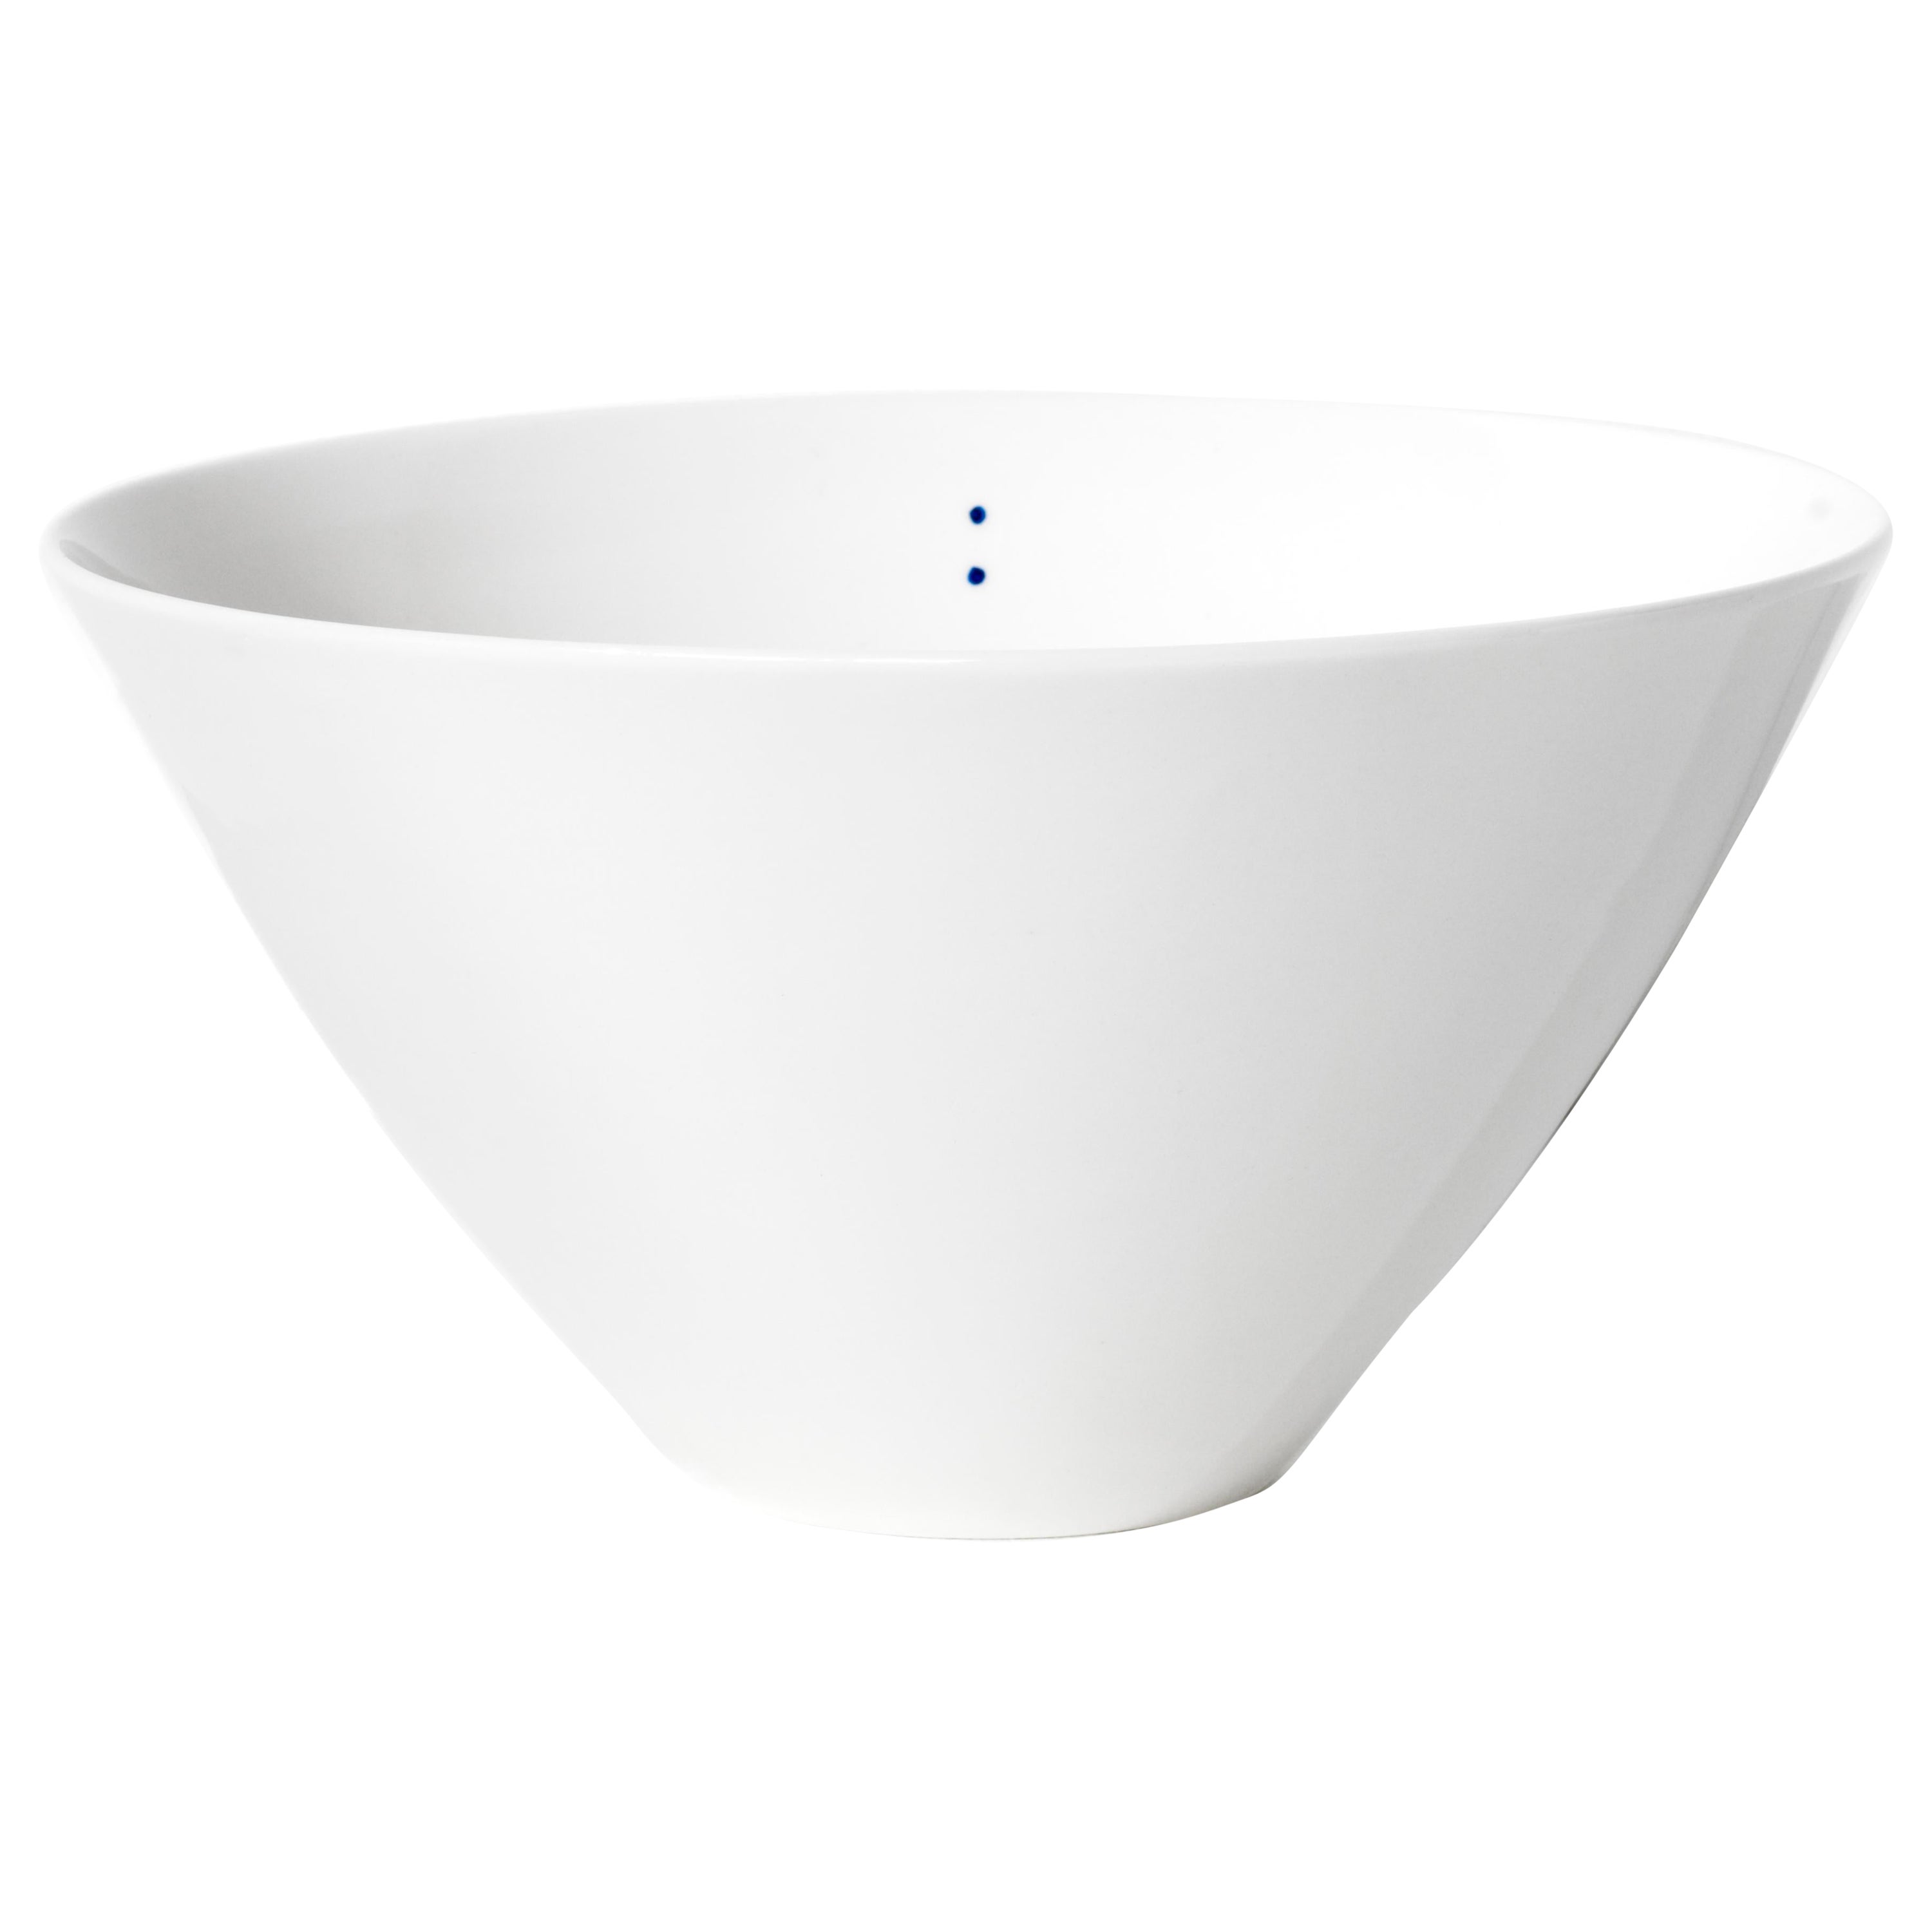 Shiro bowl large 2 dots